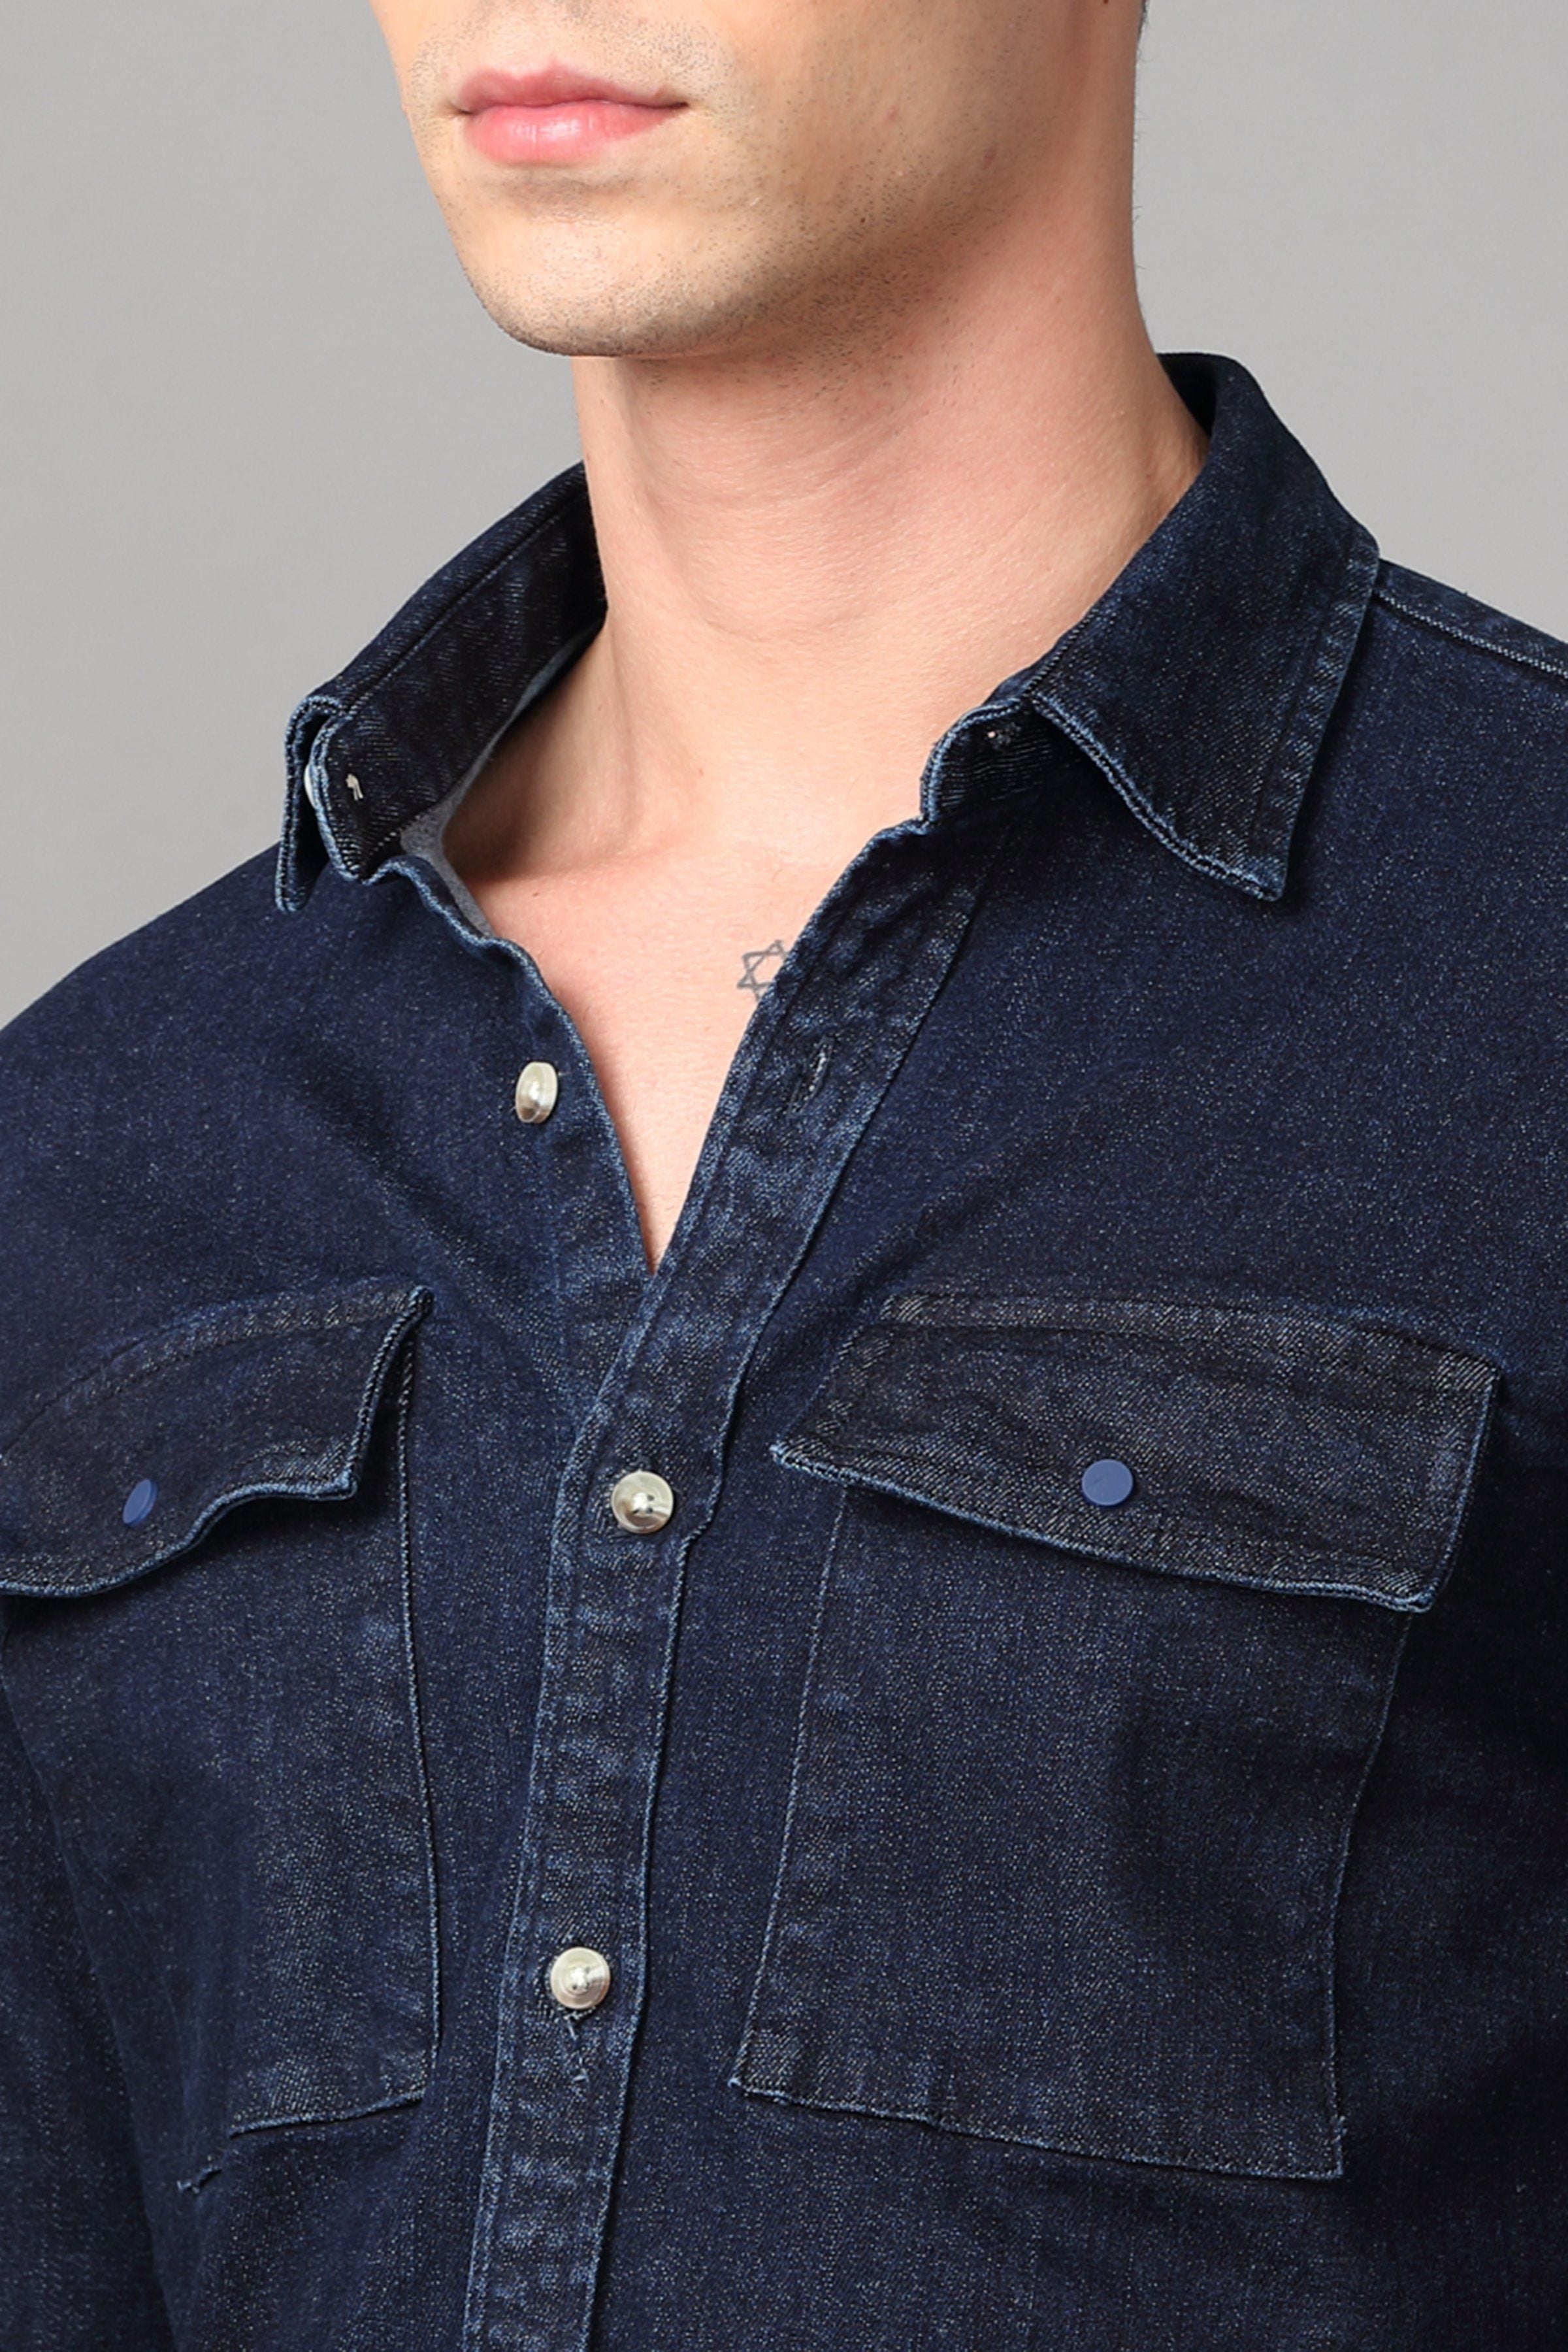 Buy Dark Blue Jean Shirt Men at Great Price Online – Badmaash